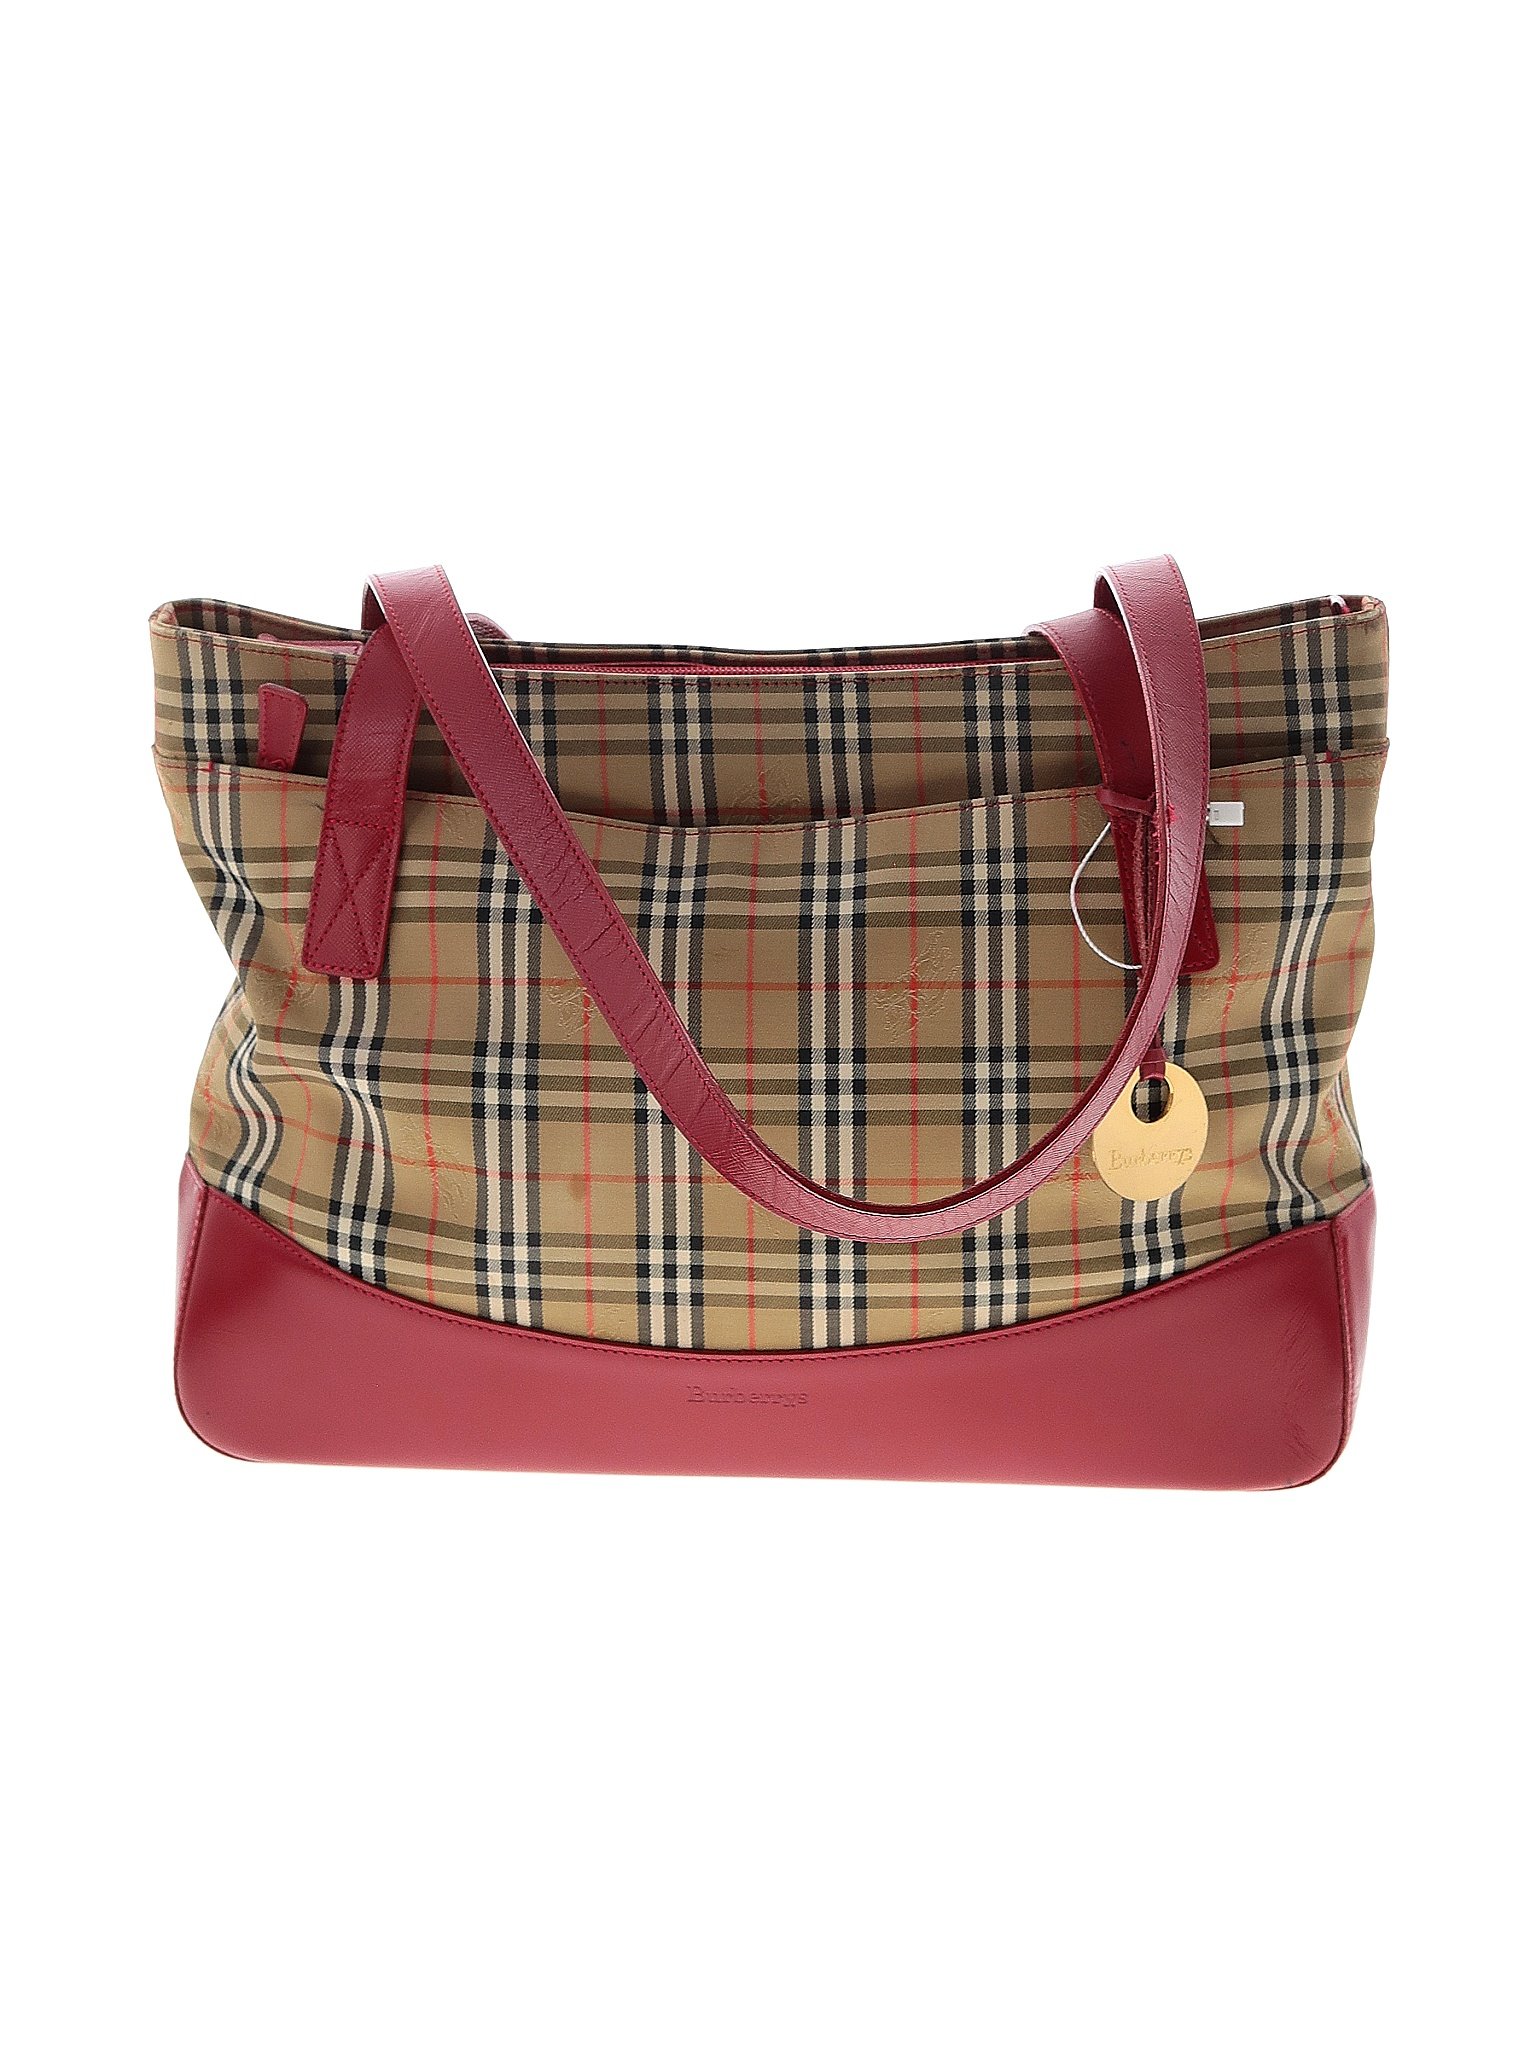 Burberry Handbags On Sale Up To 90% Off Retail | thredUP